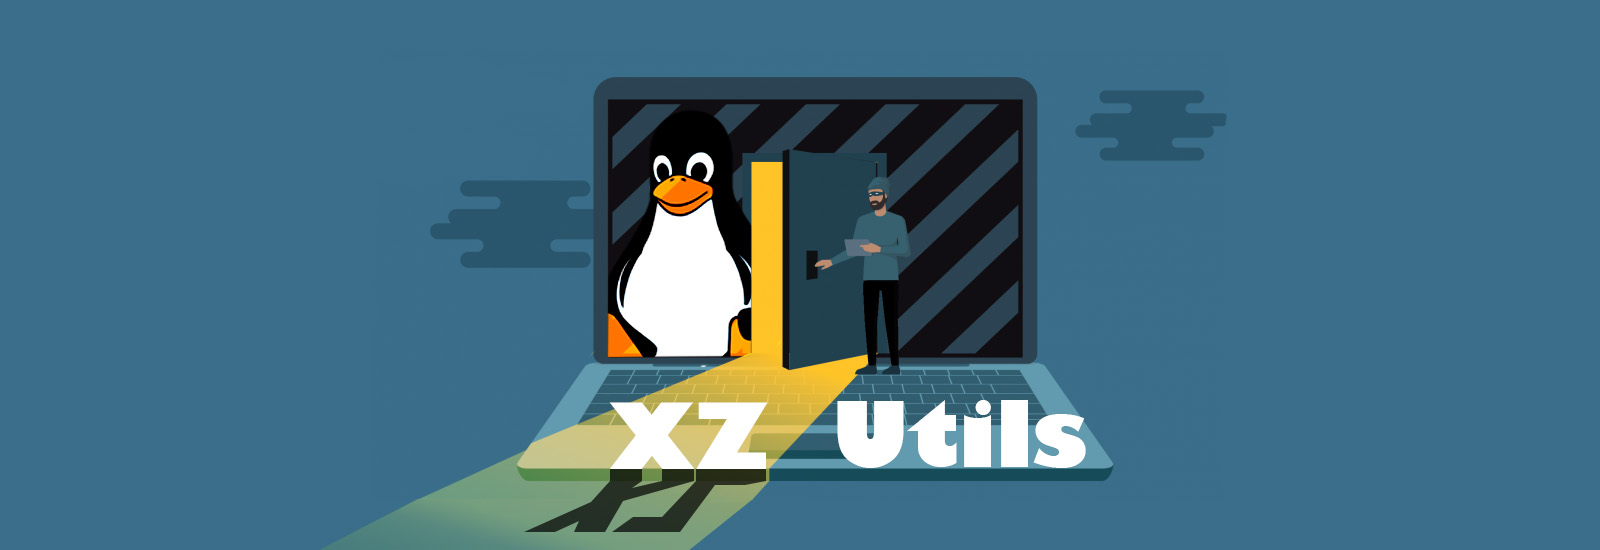 xz-utils-linux-backdoored-header